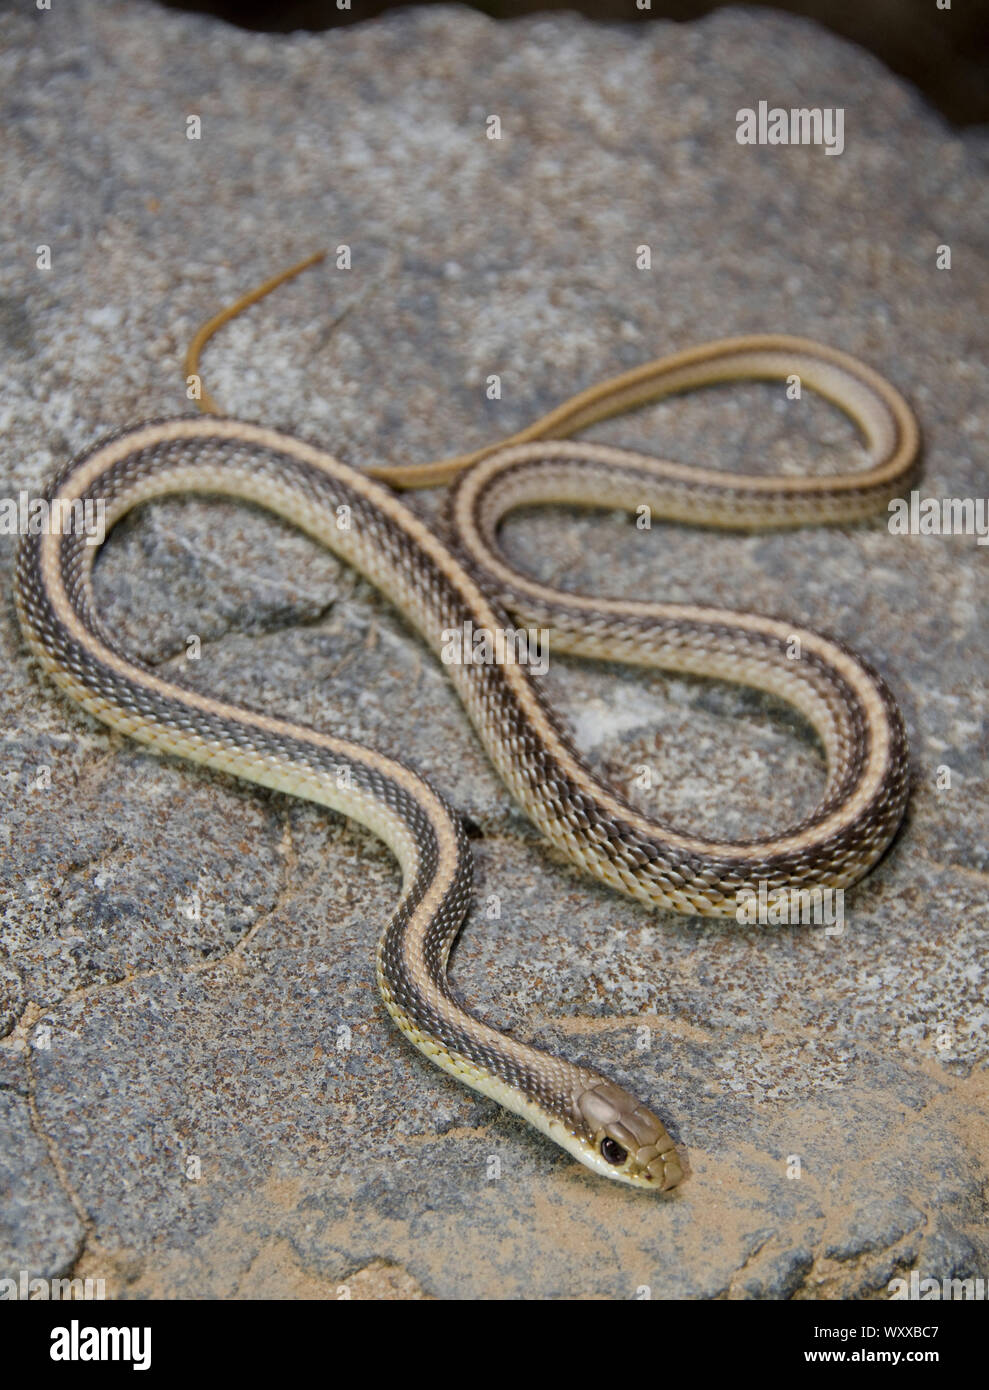 Western Patchnose serpiente. Western Patchnose Snake (Salvadora hexalepis) de San Luis Obispo, California. Foto de stock